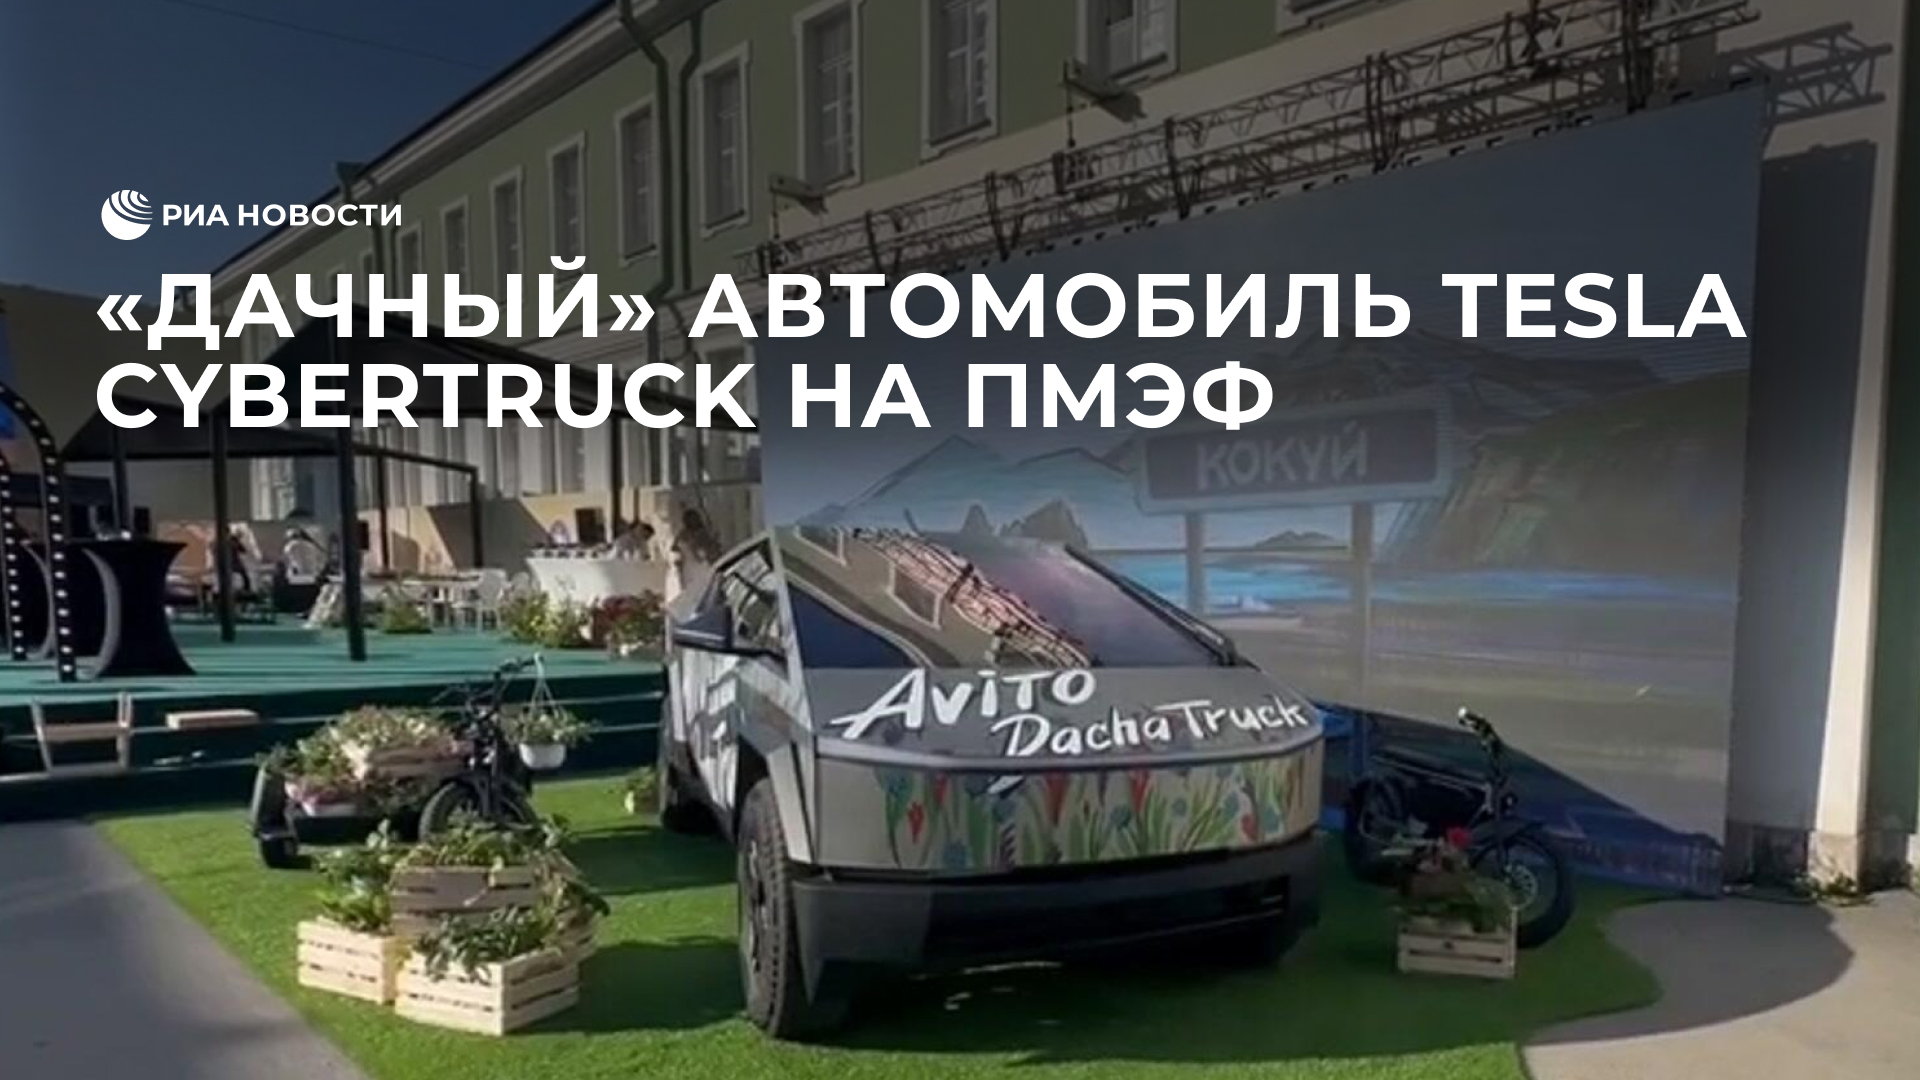 "Дачный" автомобиль Tesla Cybertruck на ПМЭФ